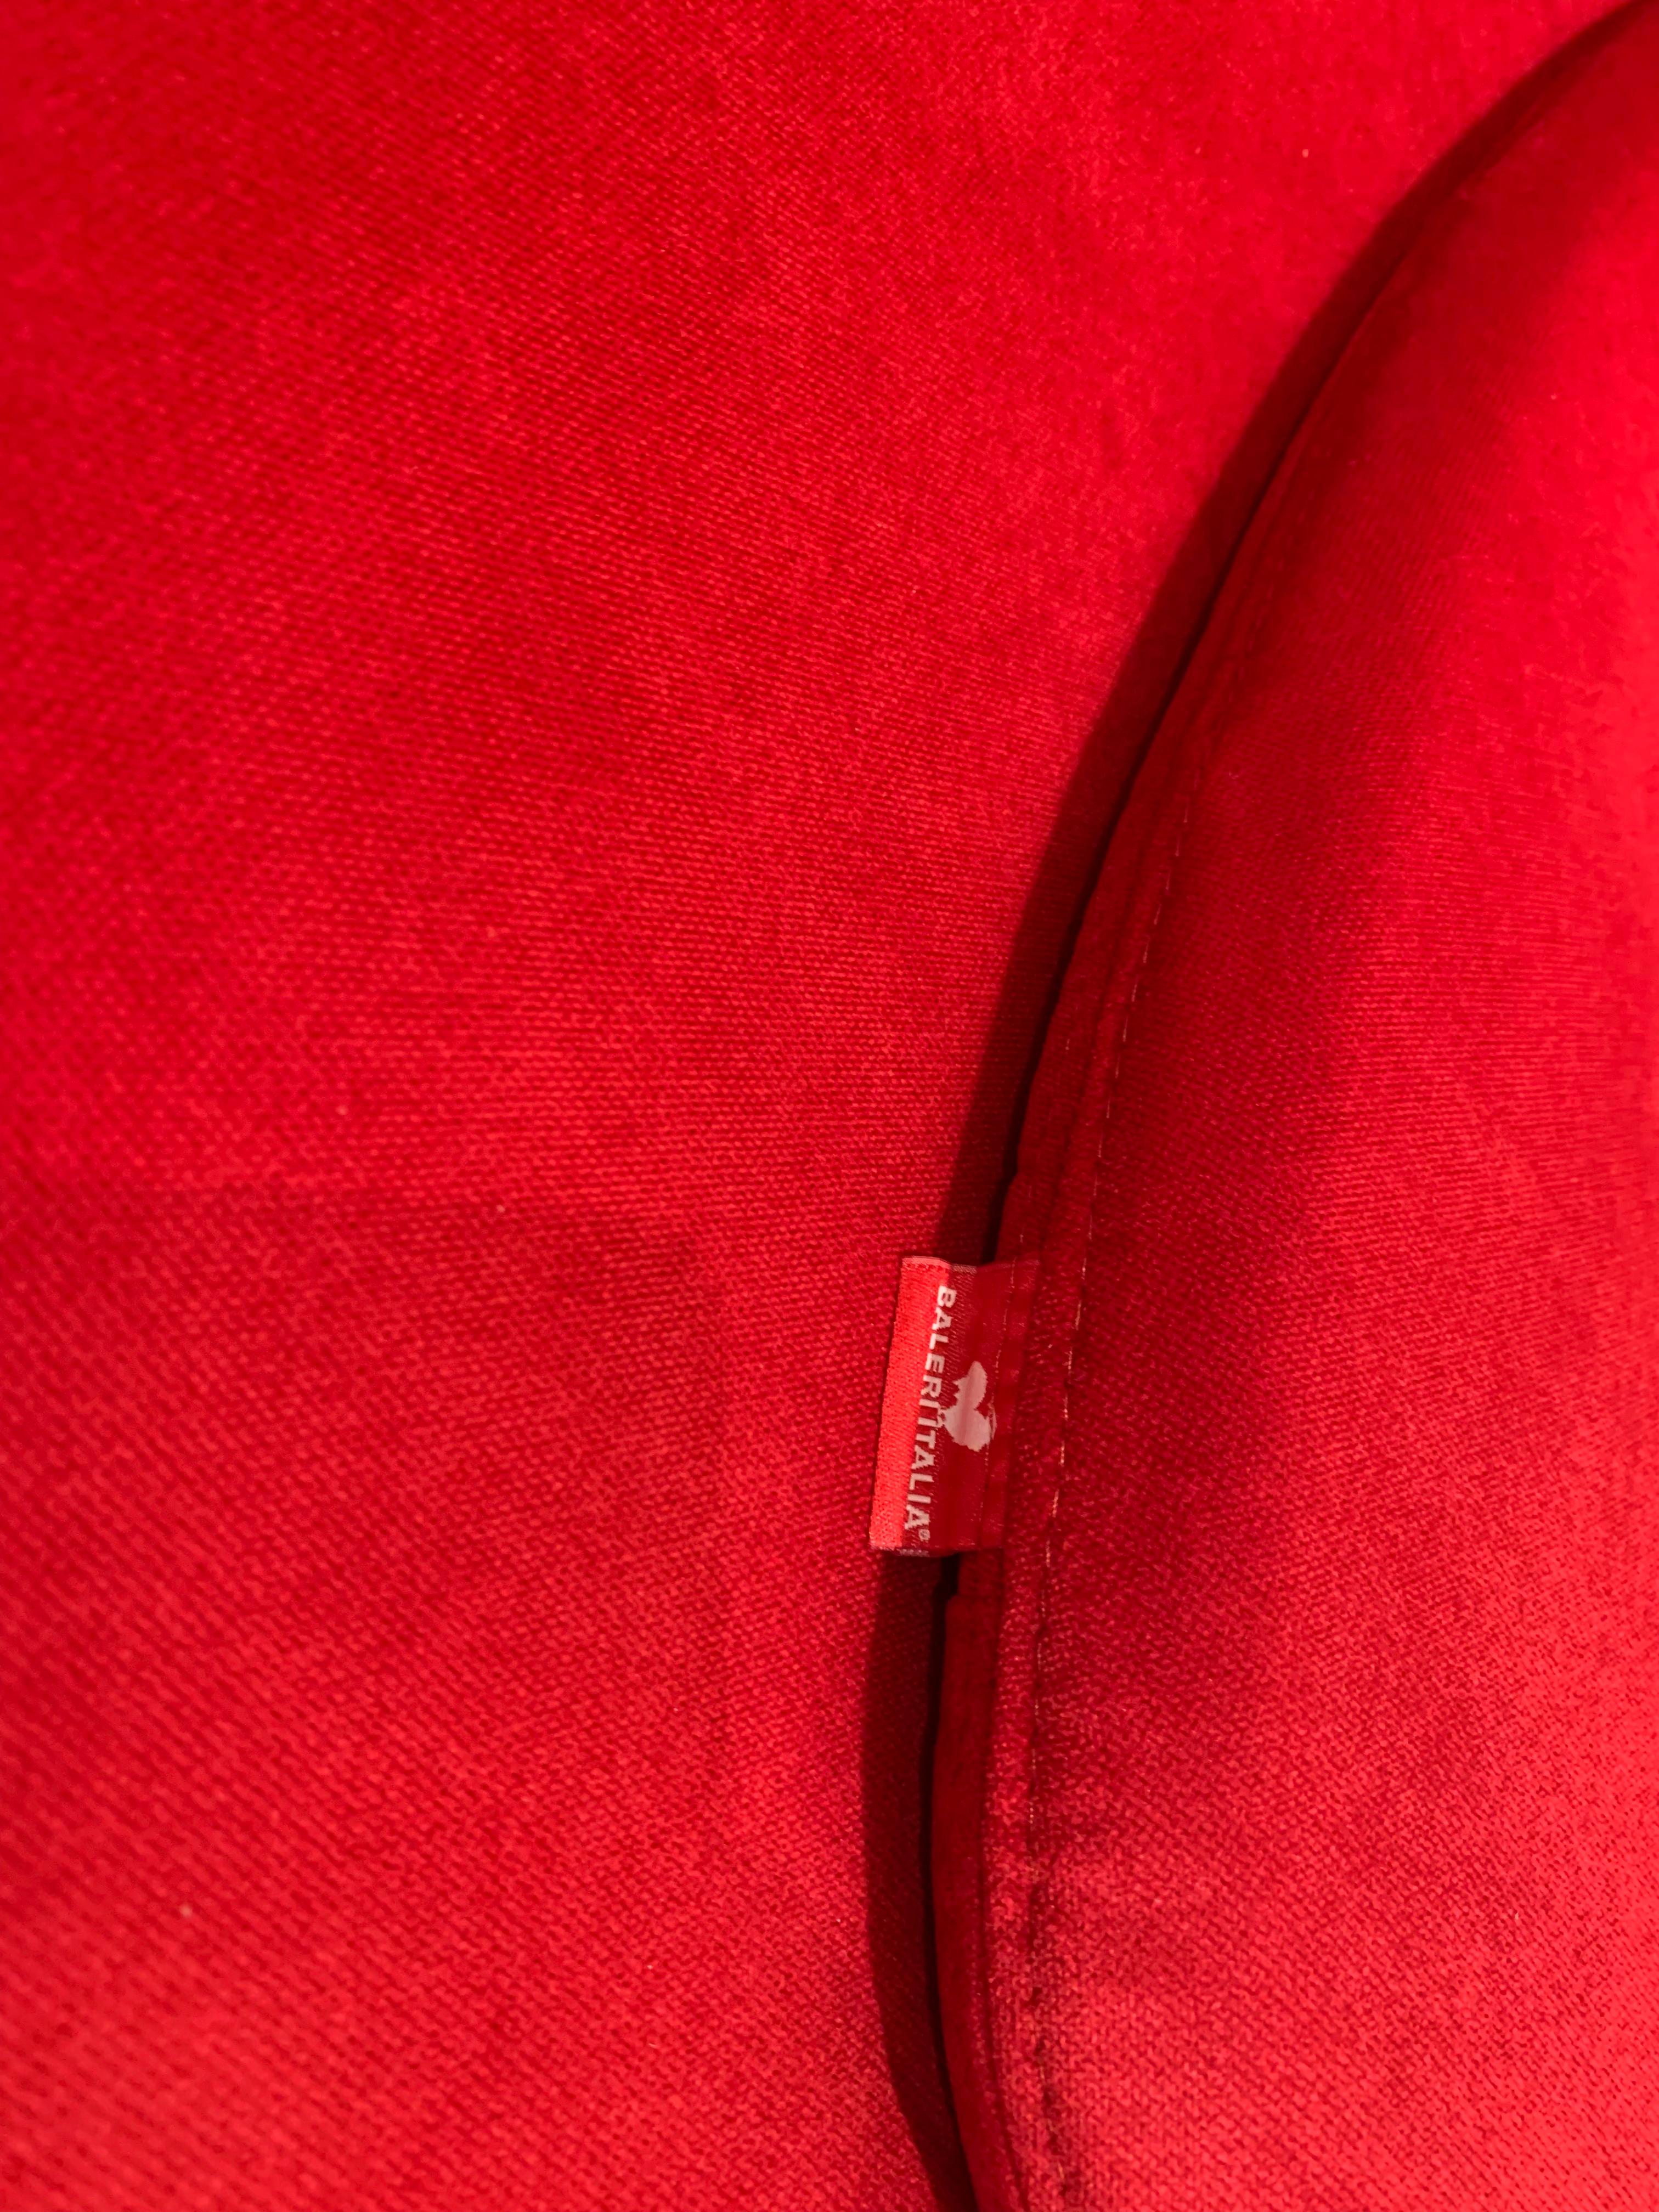 Fauteuil de salon Baleri Bermuda rouge conçu par Claesson Koivisto Rune, en stock en vente 4